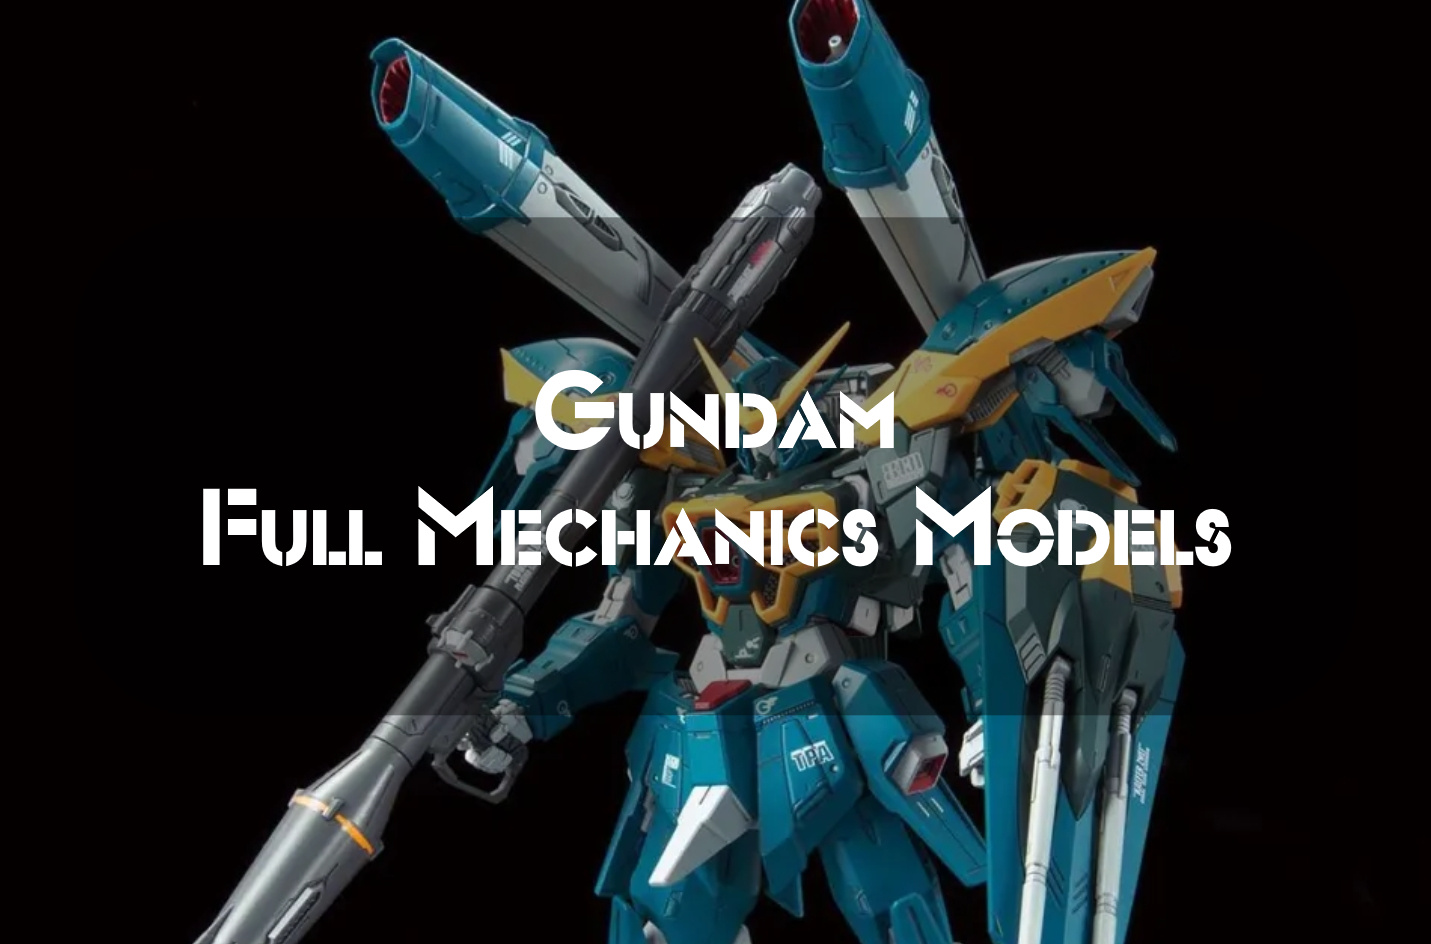 Gundam Full Mechanics Models